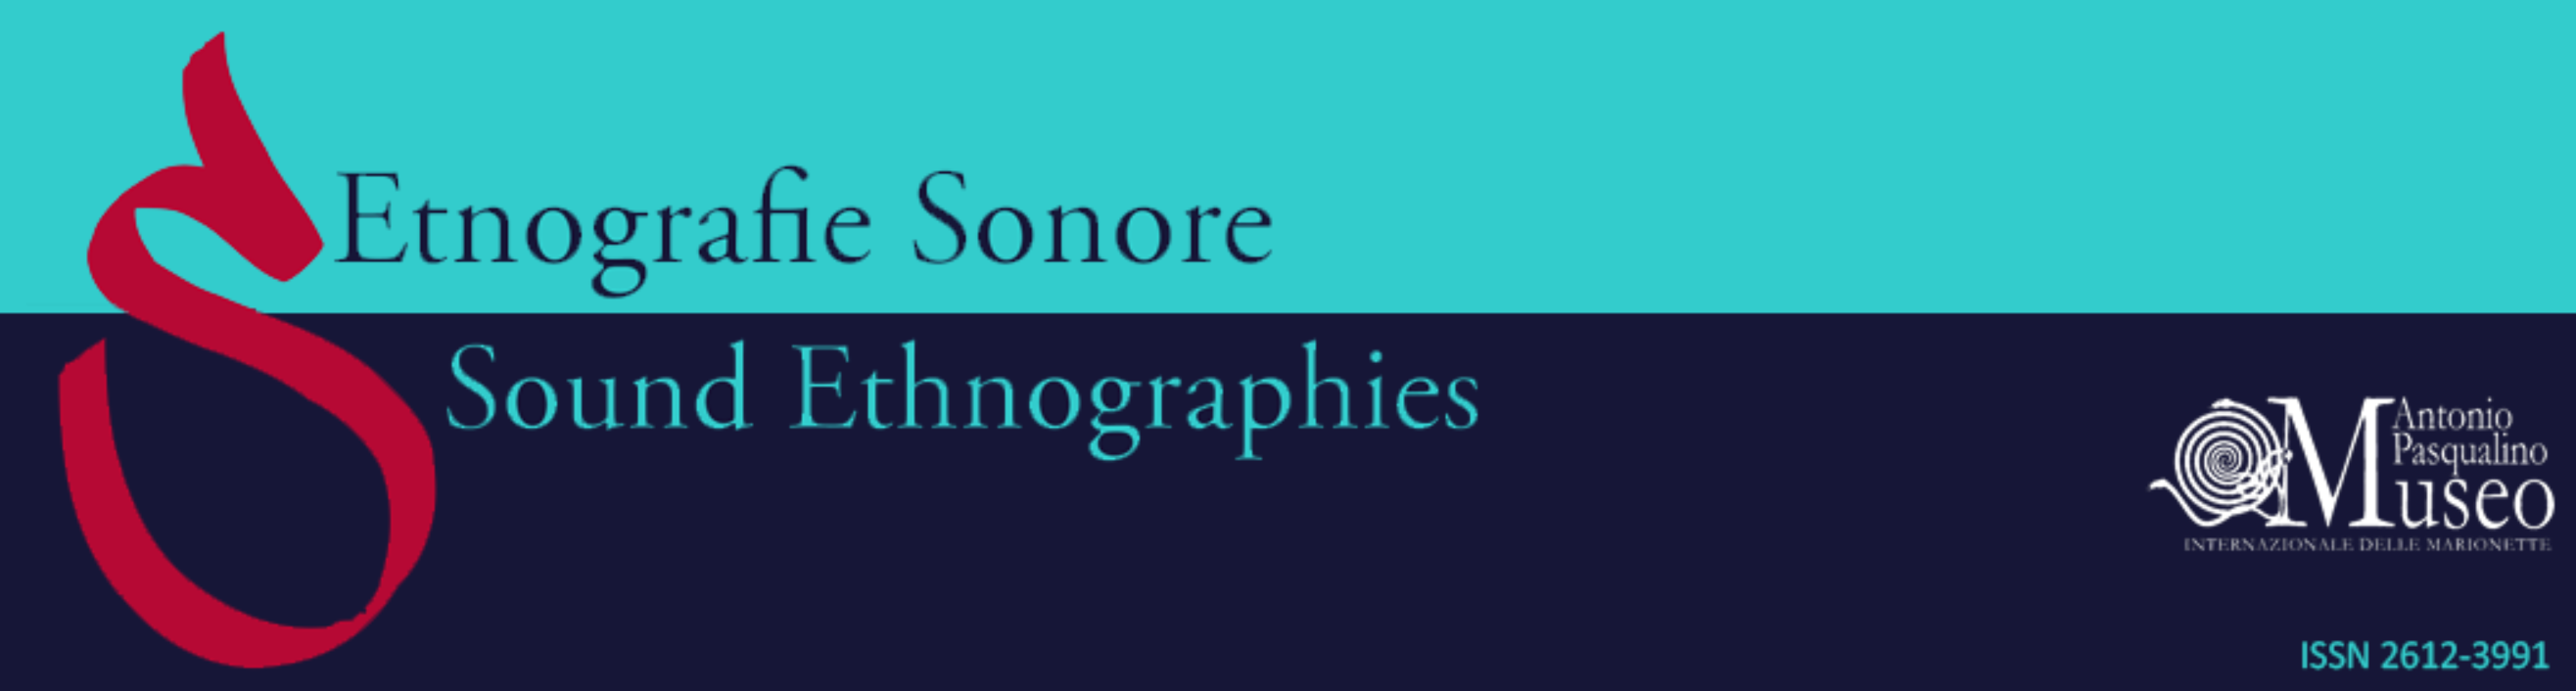 Etnografie Sonore / Sound Ethnographies